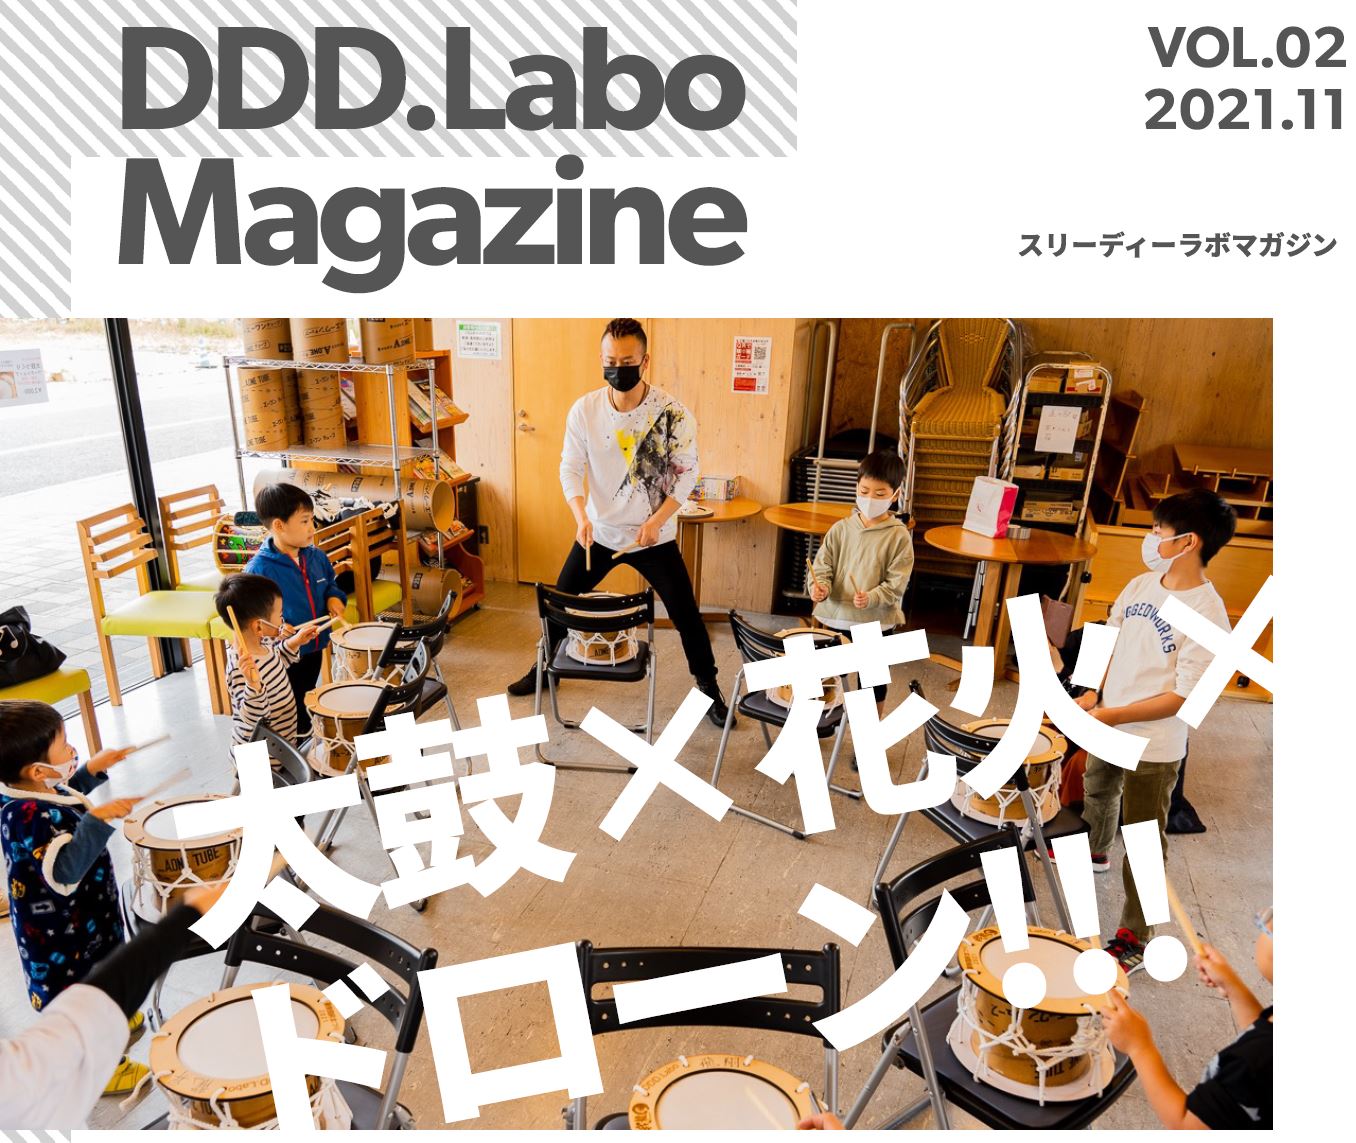 「DDD.Labo Magazine Vol.2発行」の画像